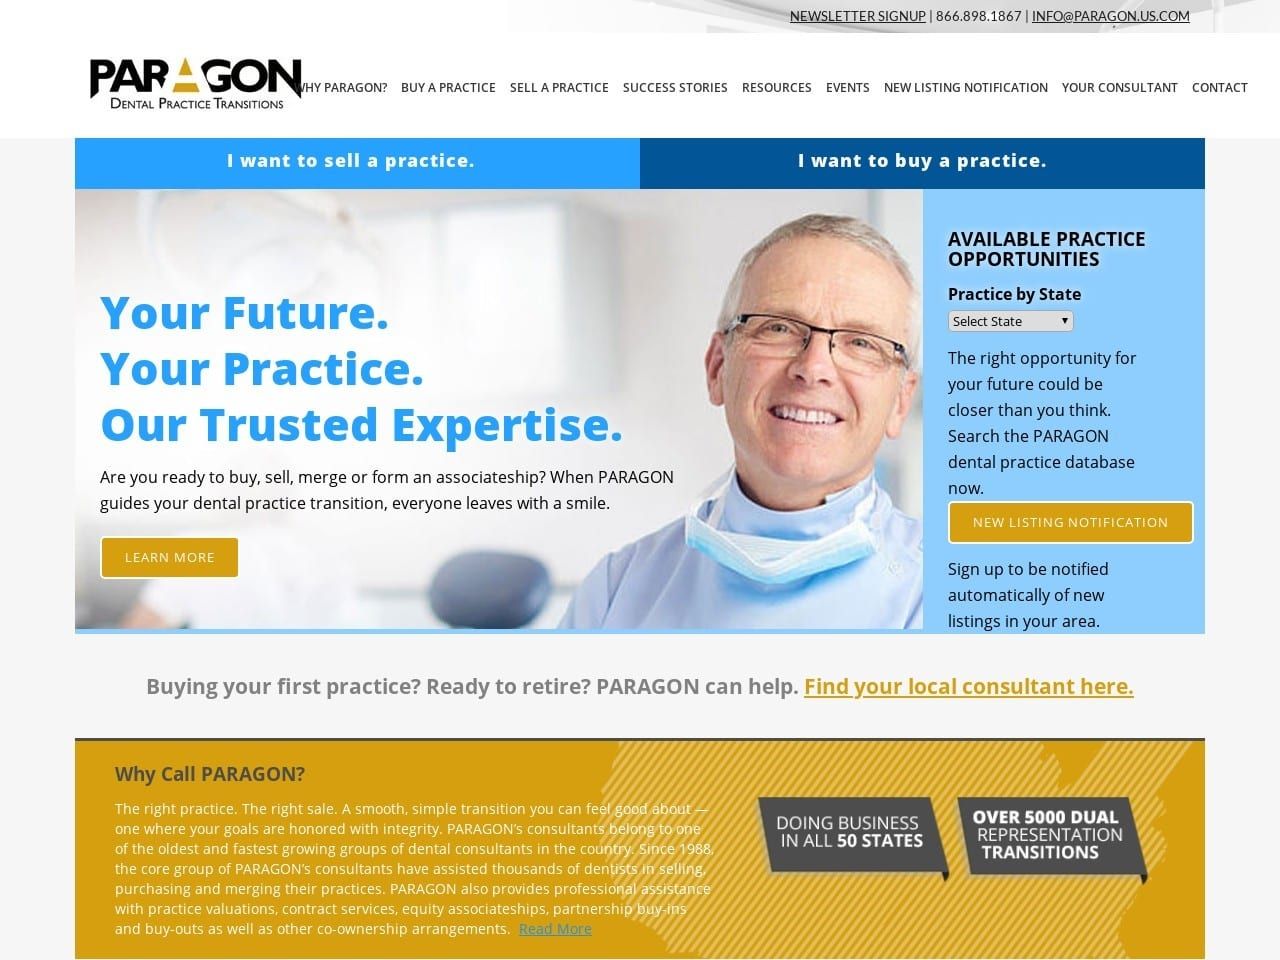 PARAGON Dental Practice Transitions Website Screenshot from paragon.us.com